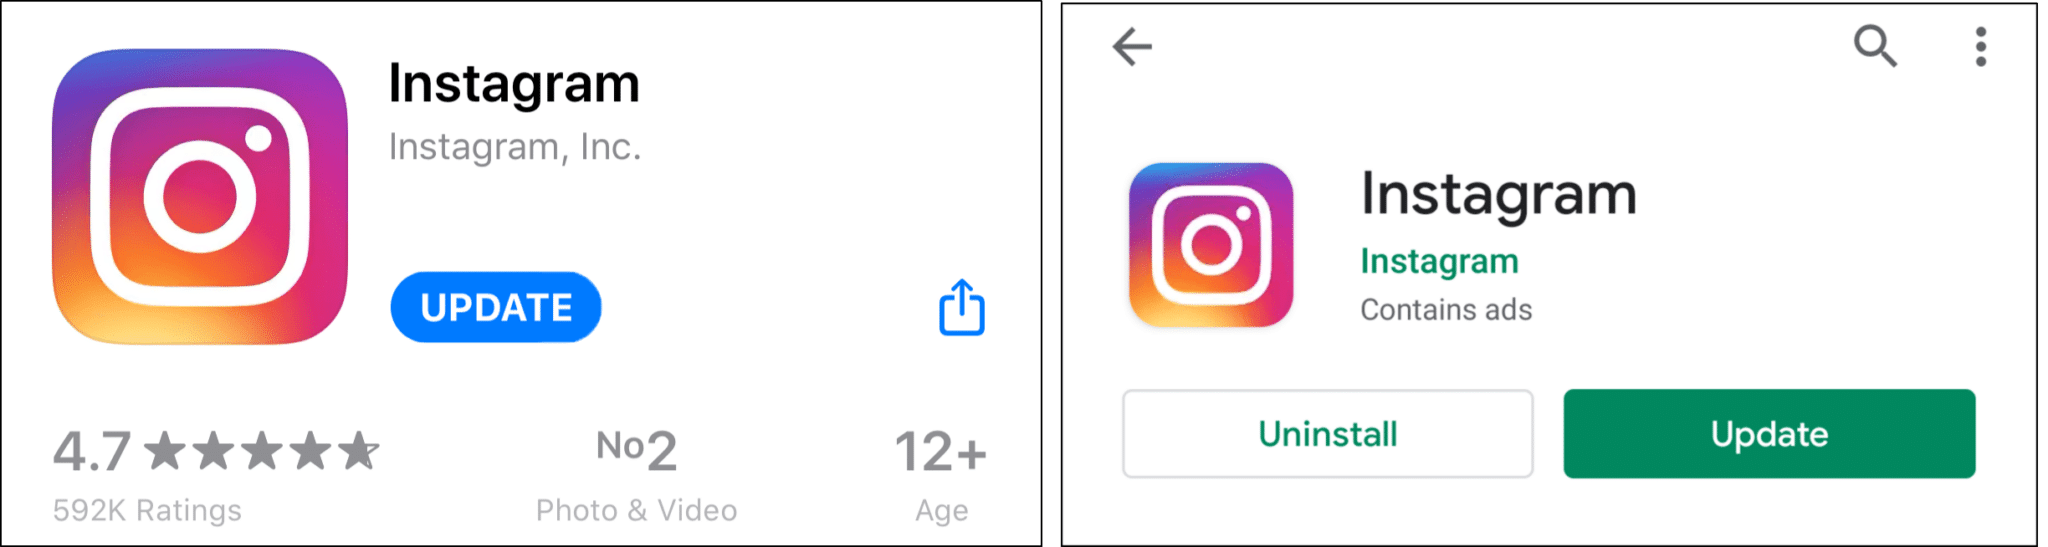 Update Instagram app to fix Instagram not sending SMS code Issue